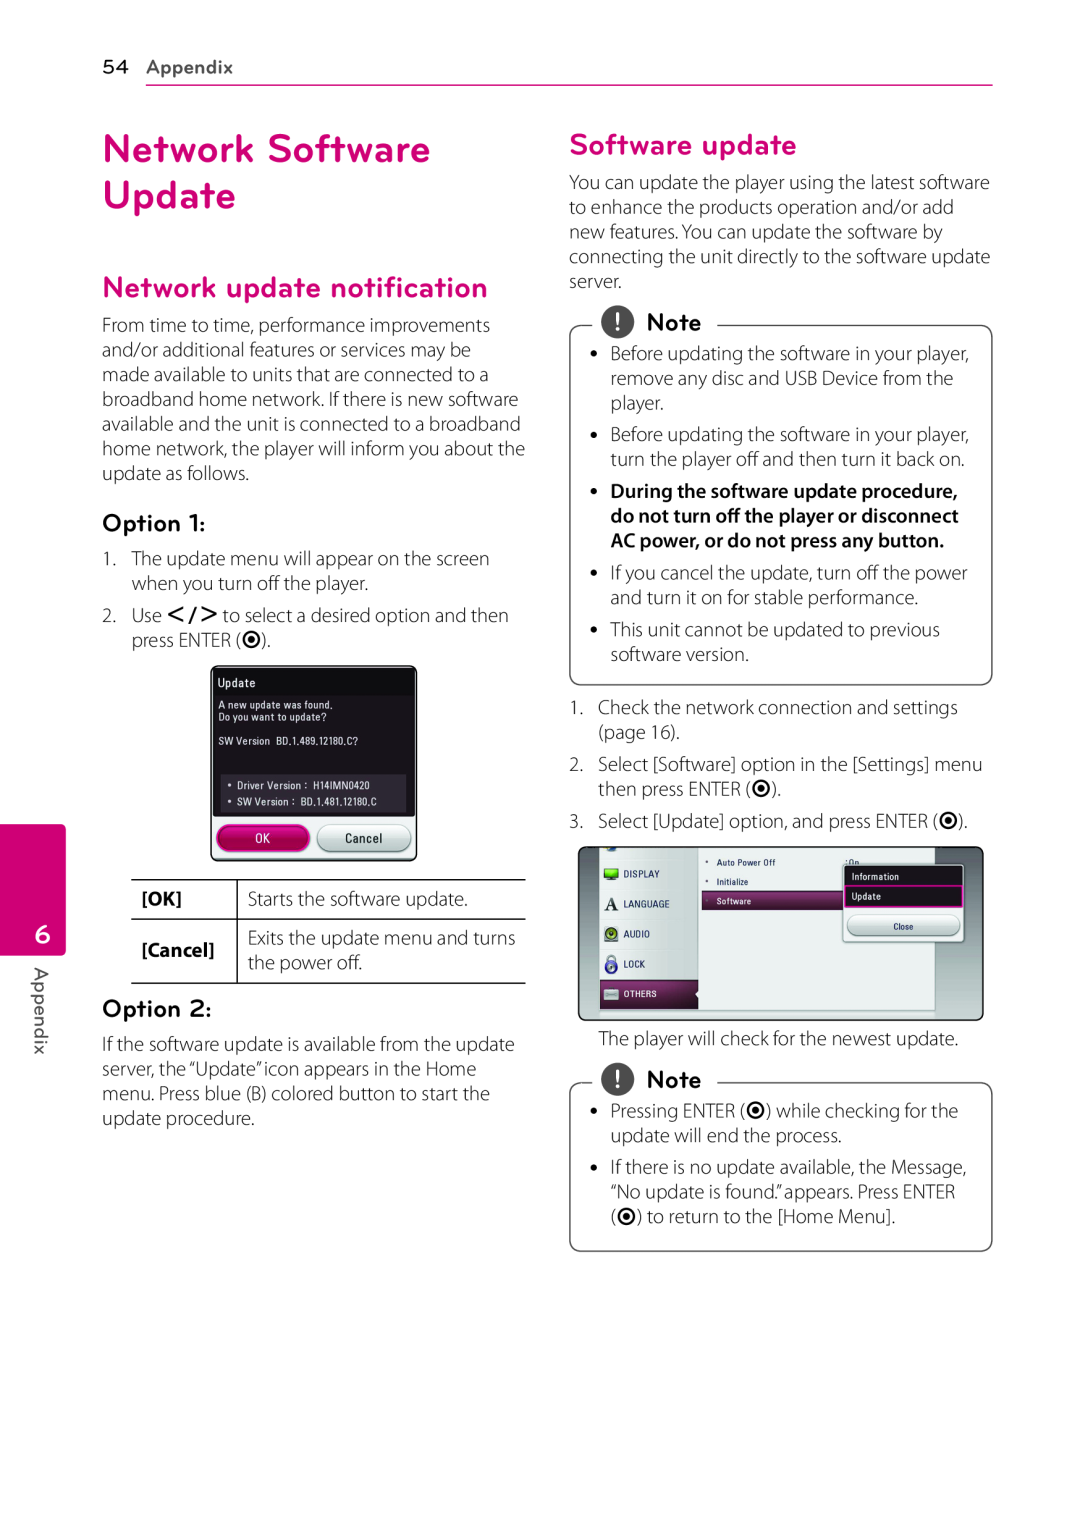 LG Electronics BP530 owner manual Network Software Update, Network update notification, Software update, Appendix 